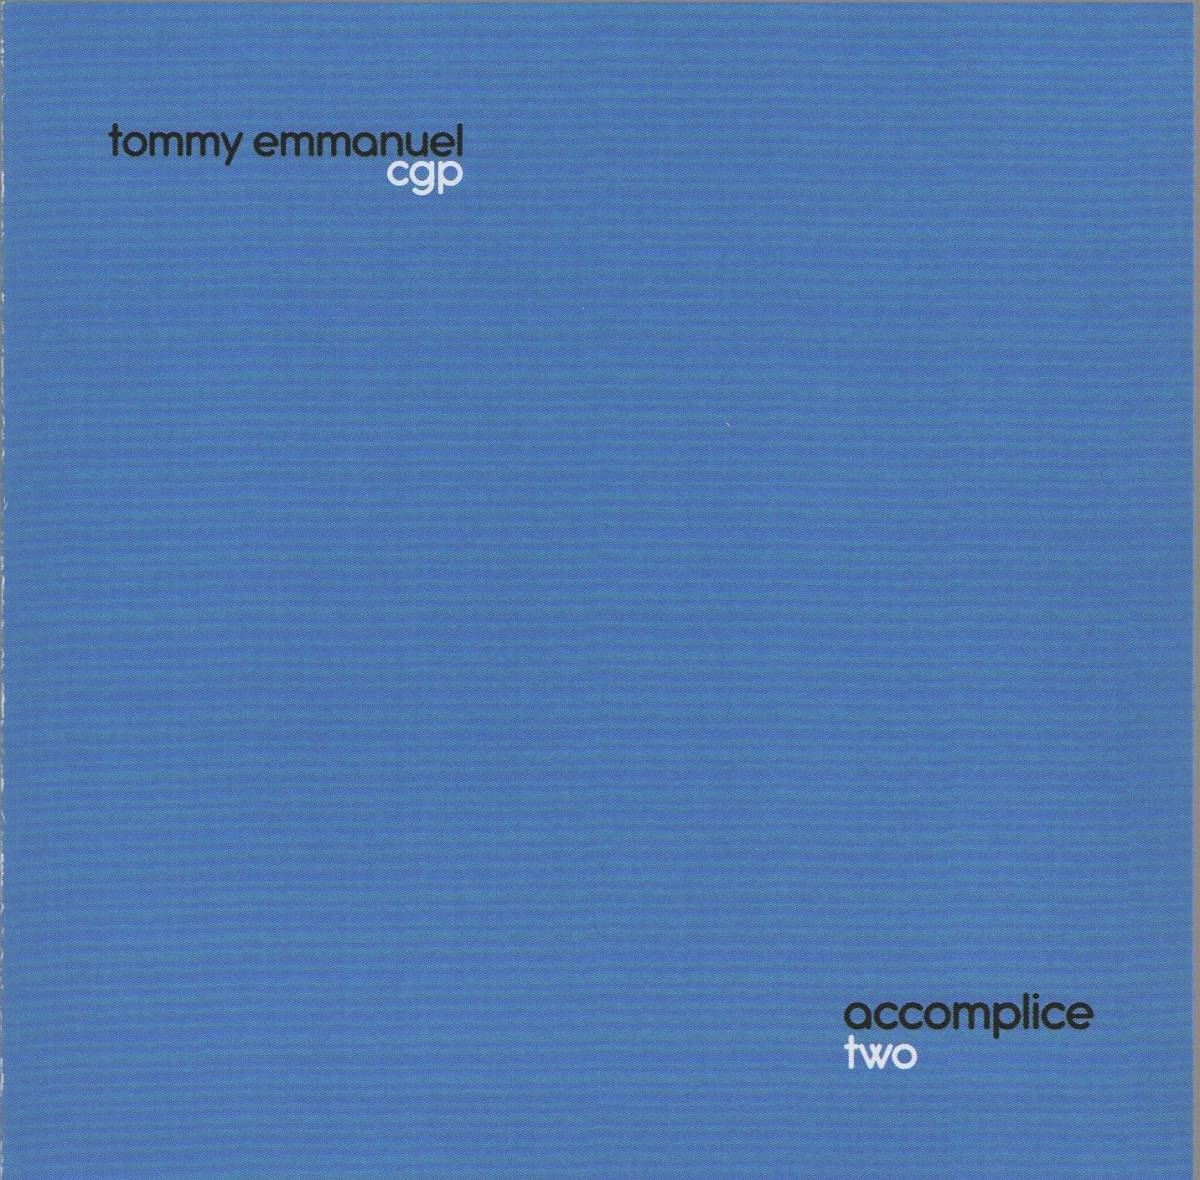 【CD】TOMMY EMMANUEL - ACCOMPLICE TWO 新譜新同美品_画像4